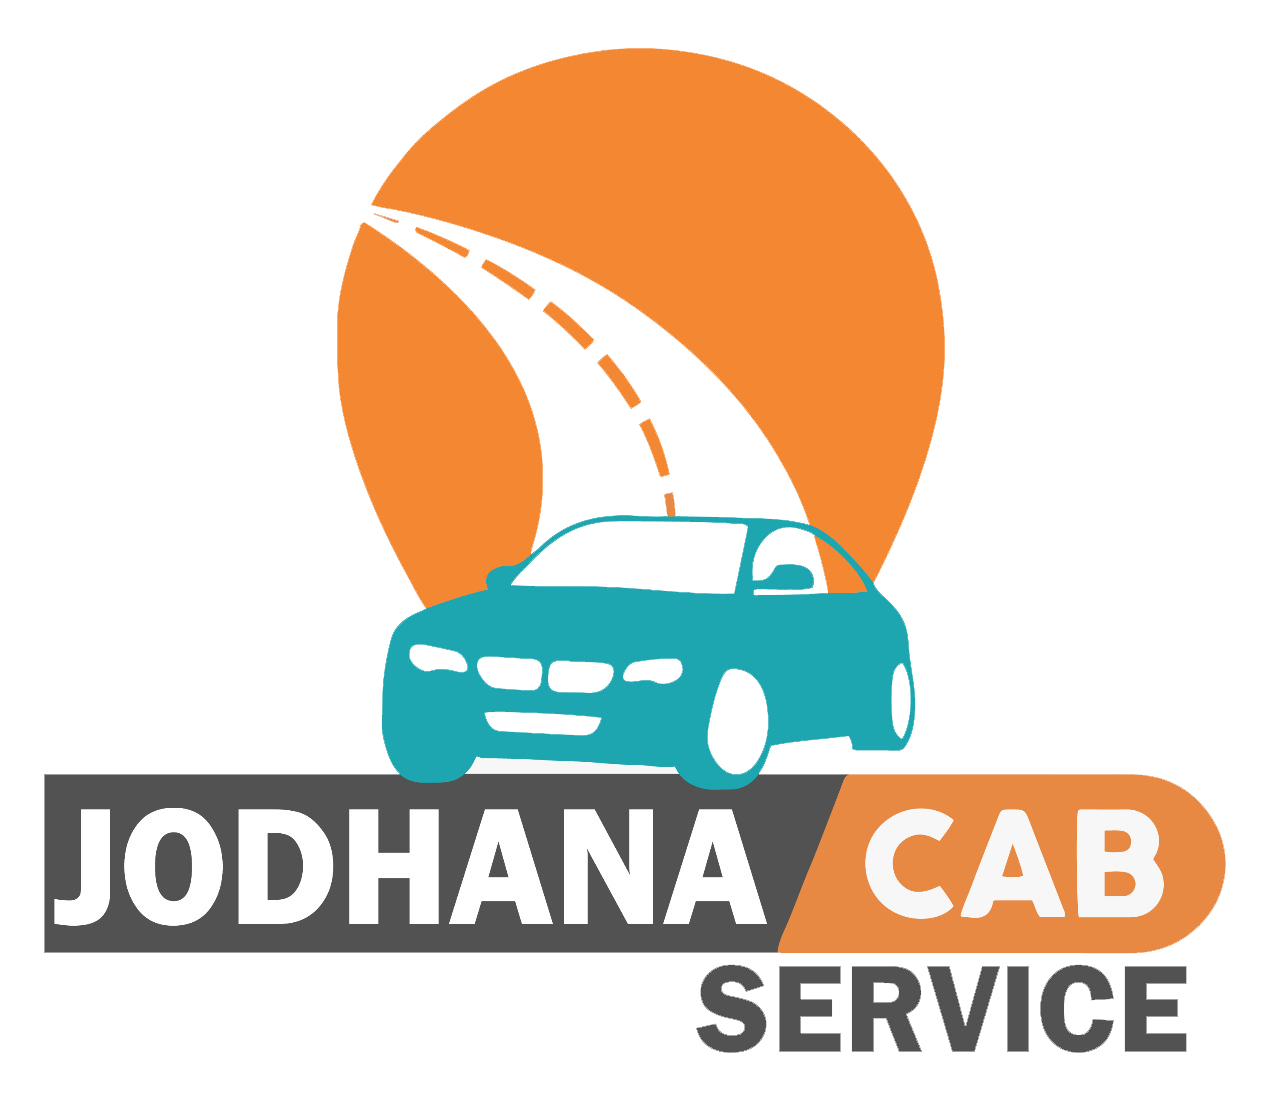 JODHANA CAB SERVICE